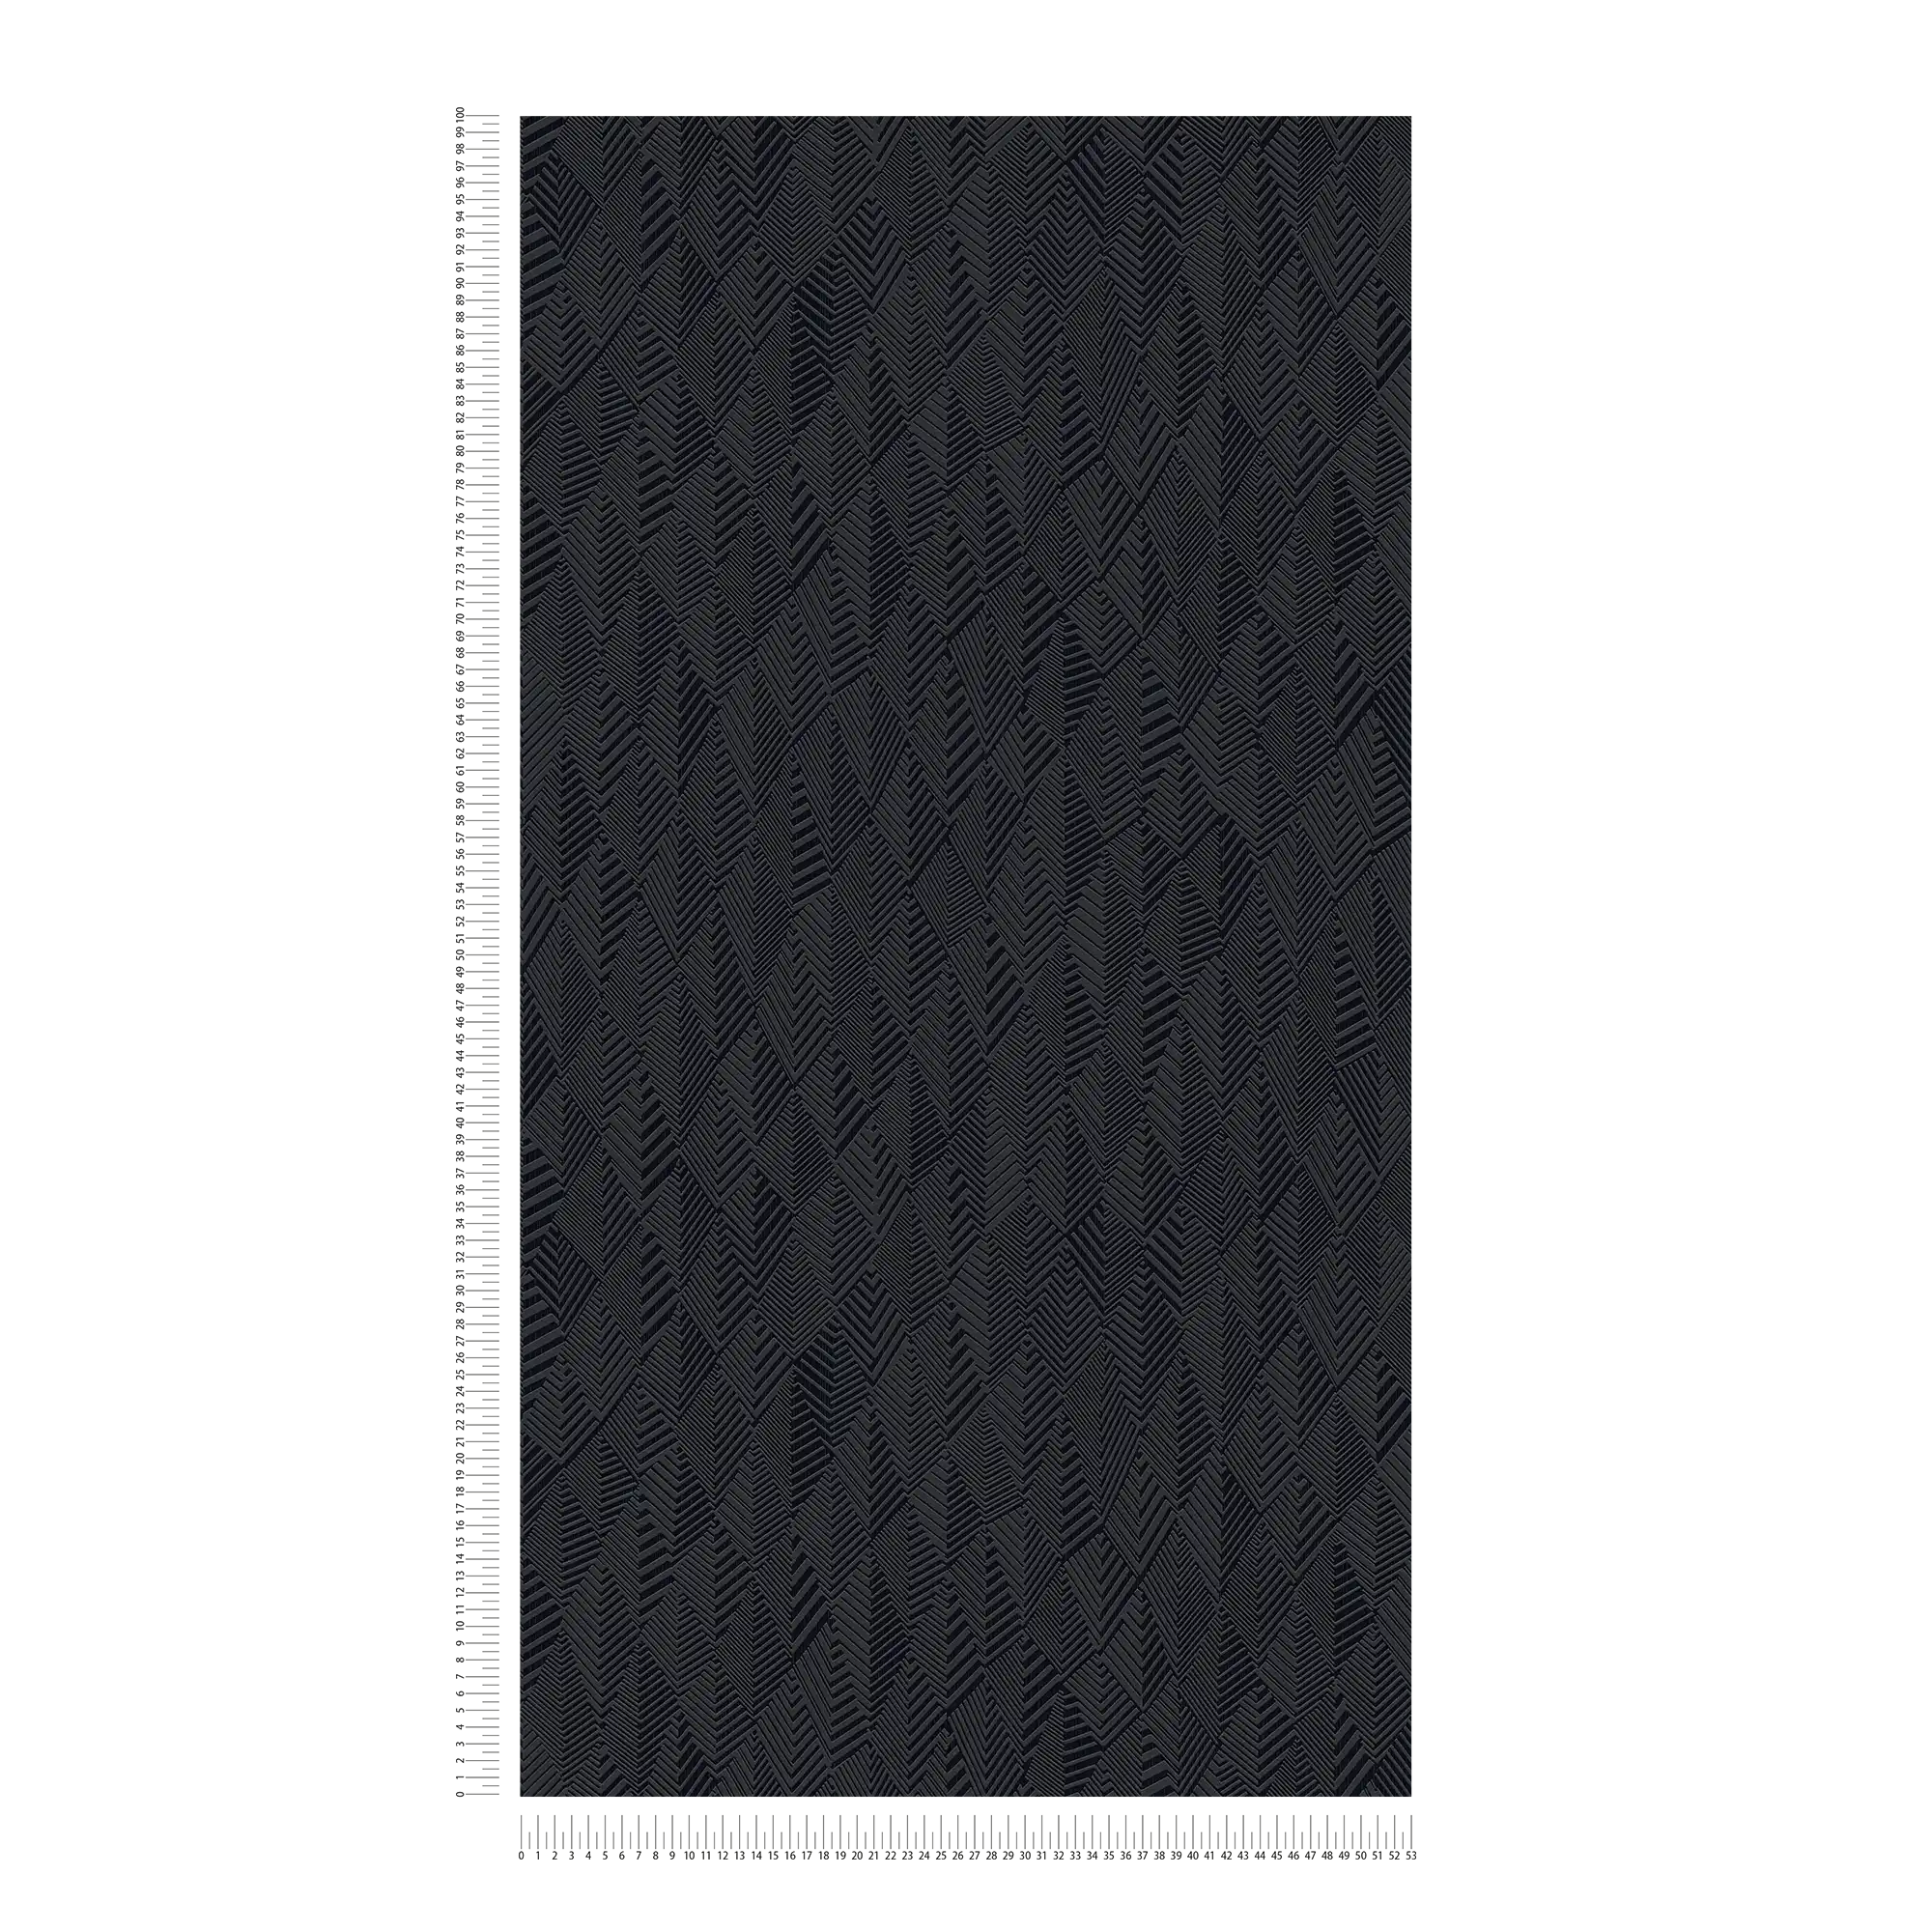             Wallpaper lined textured pattern & gloss finish - Black
        